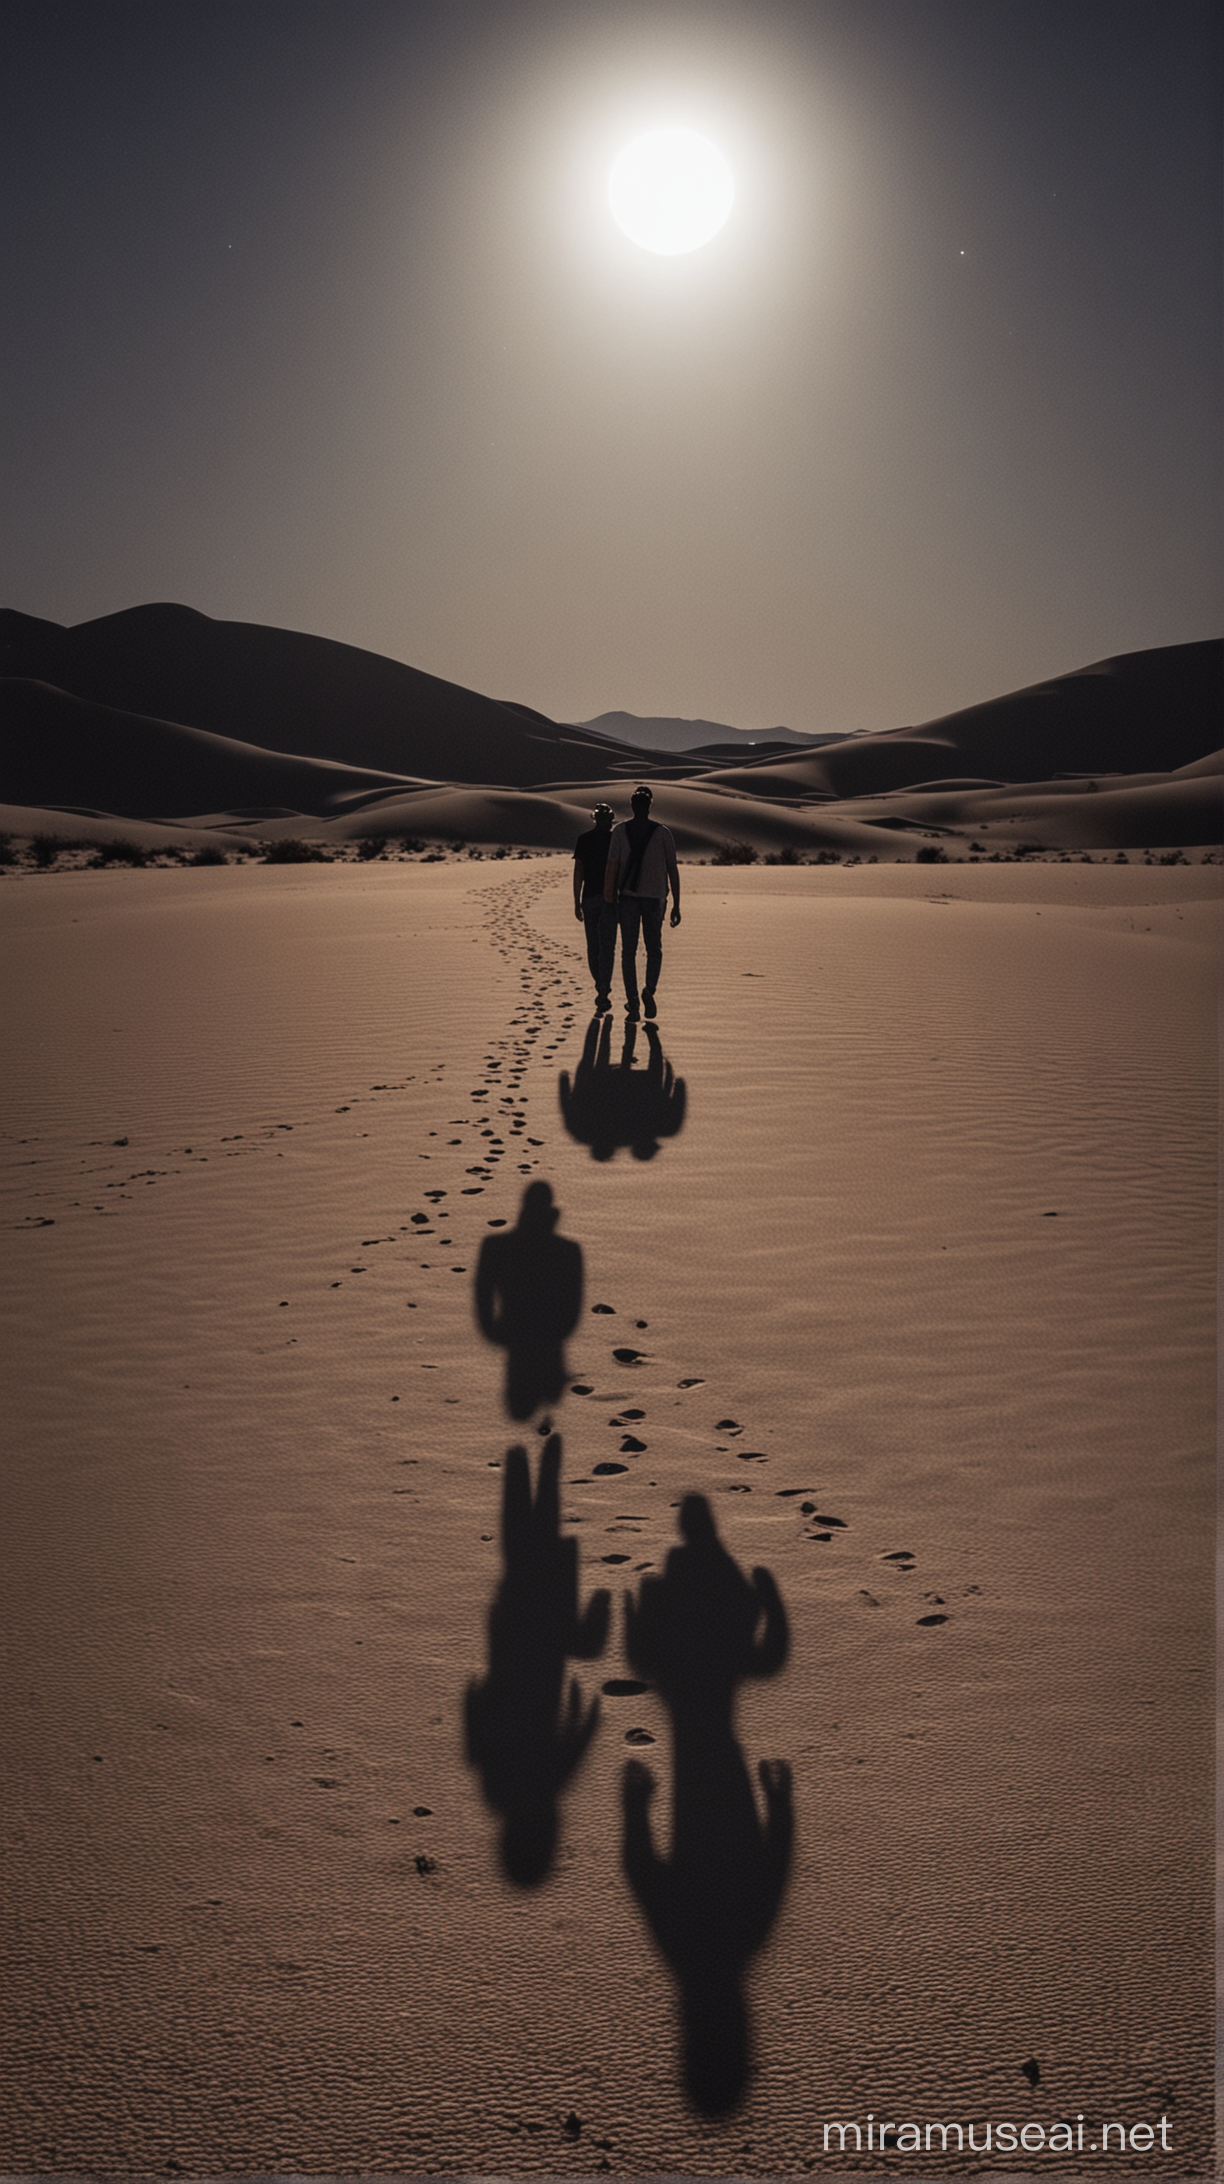 Men Walking under the Desert Moonlight